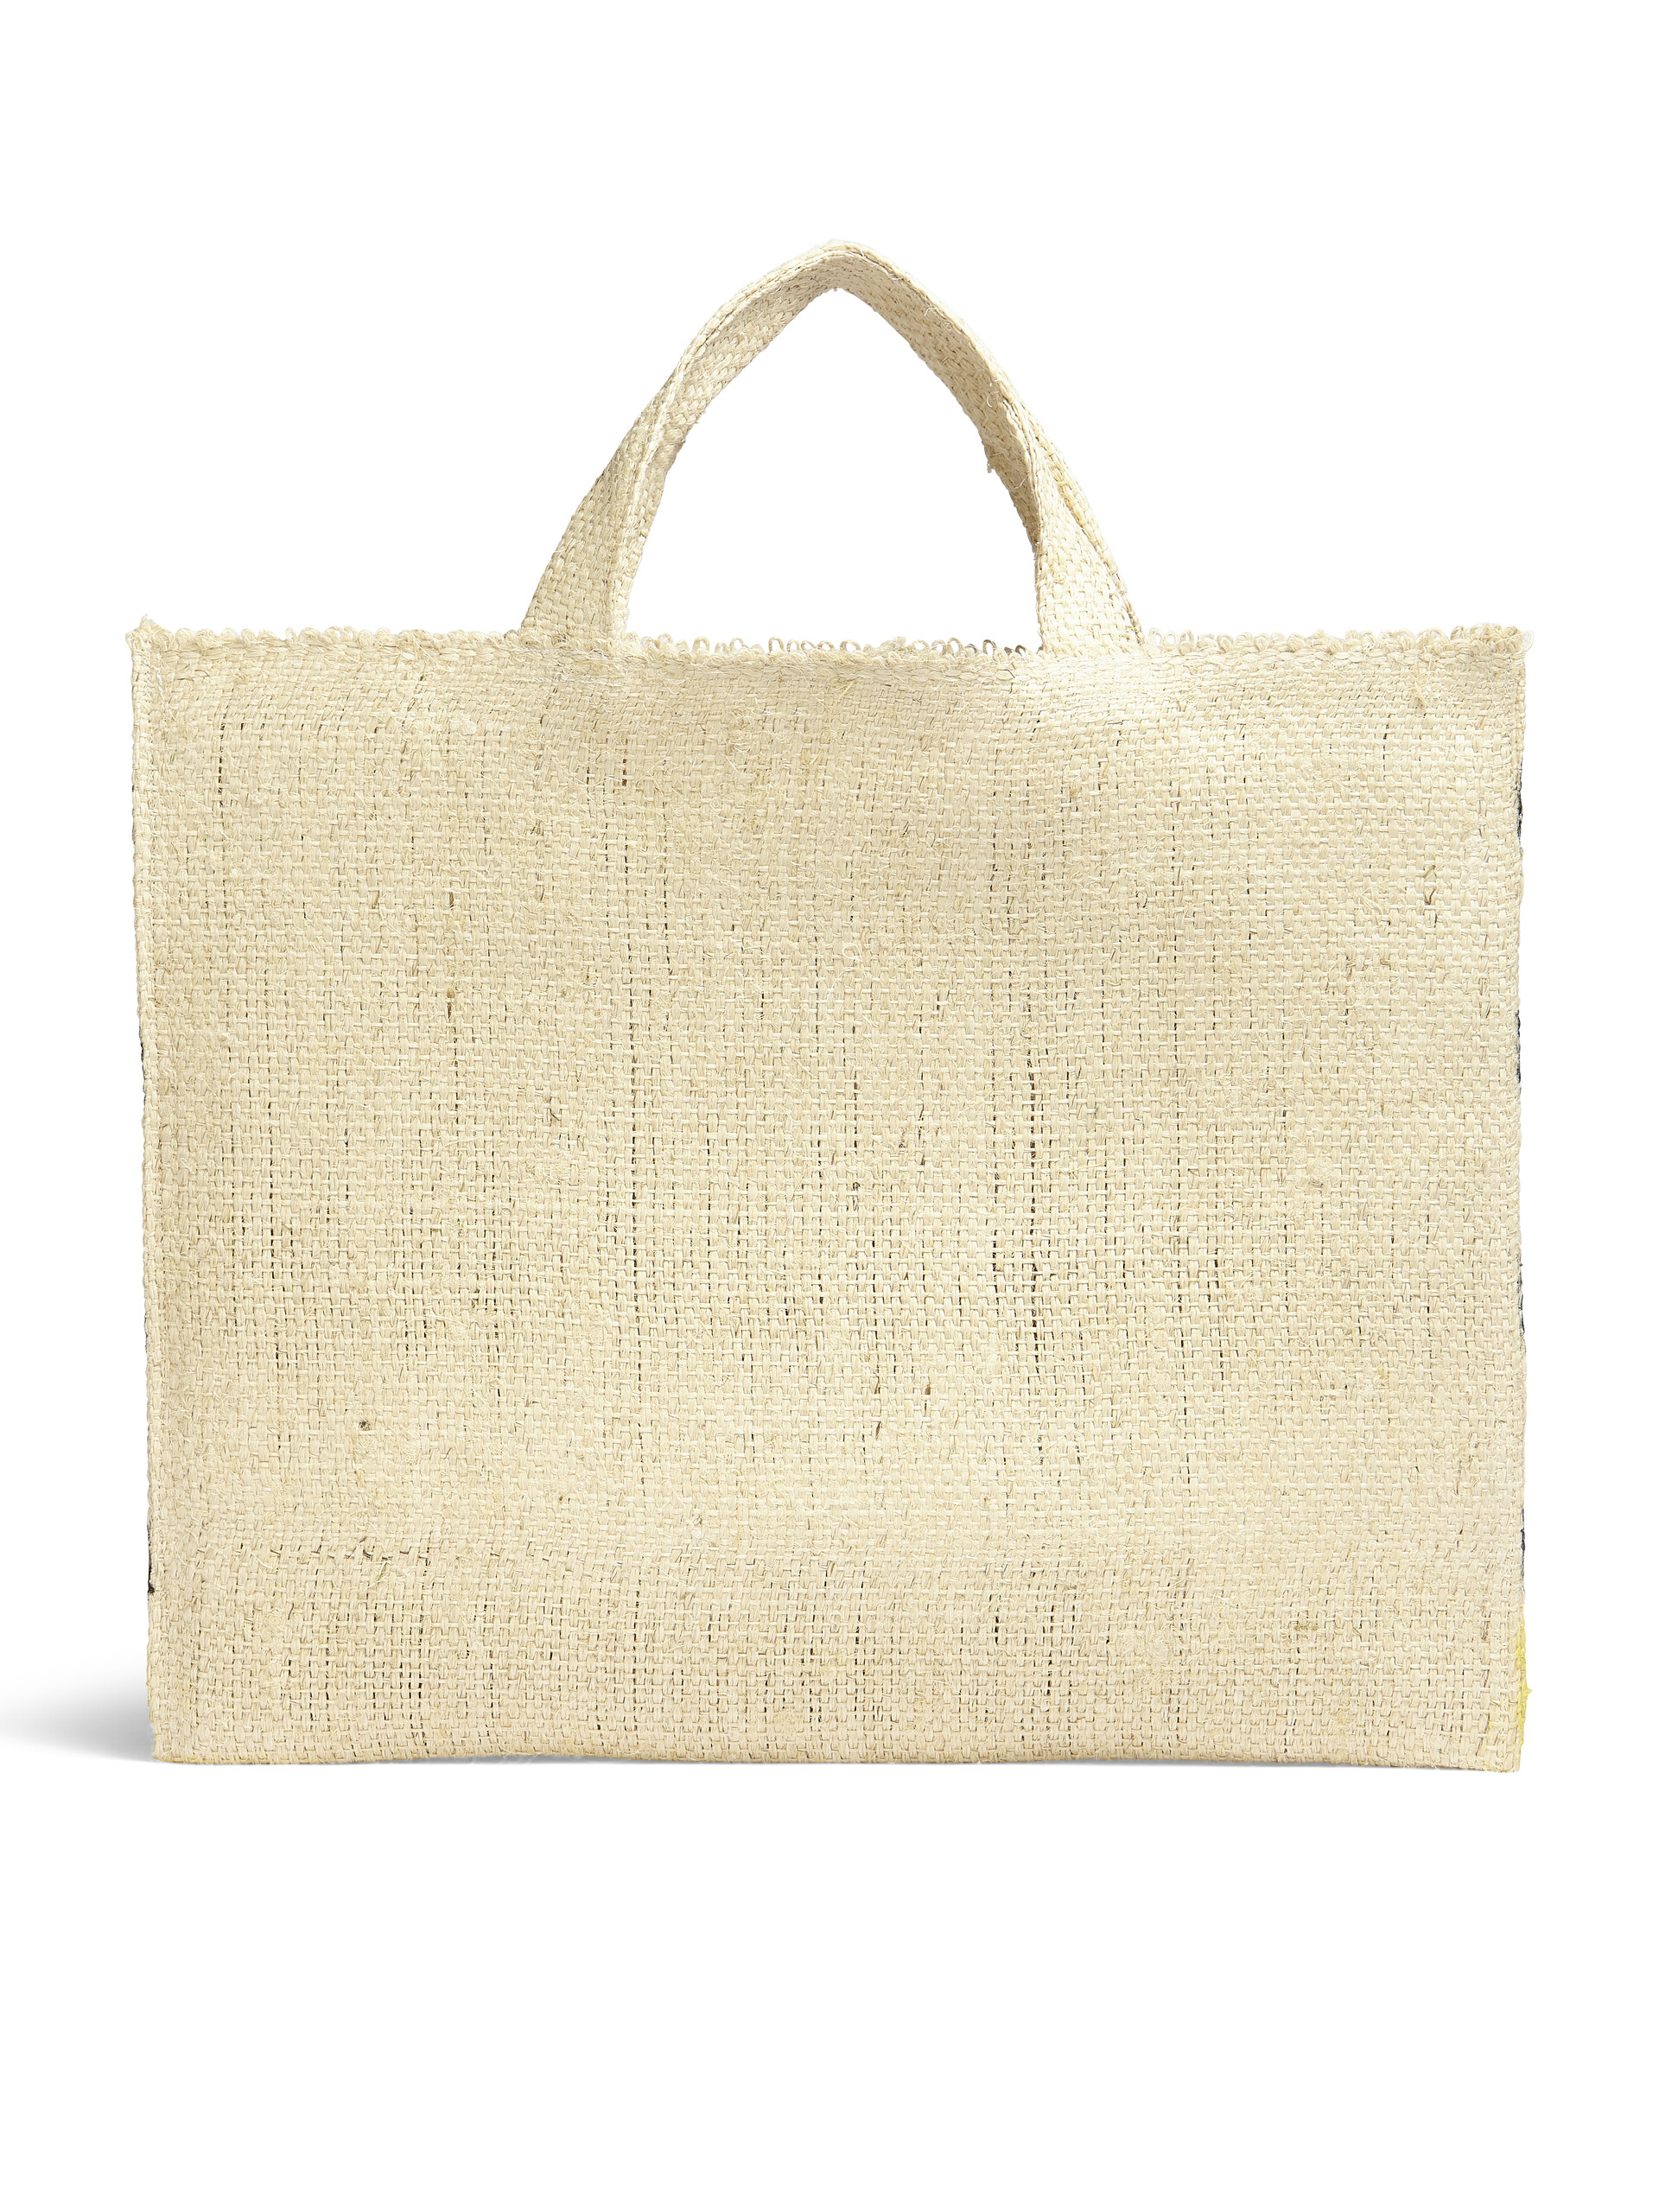 MARNI MARKET CANAPA large bag in black and orange natural fiber - Shopping Bags - Image 3